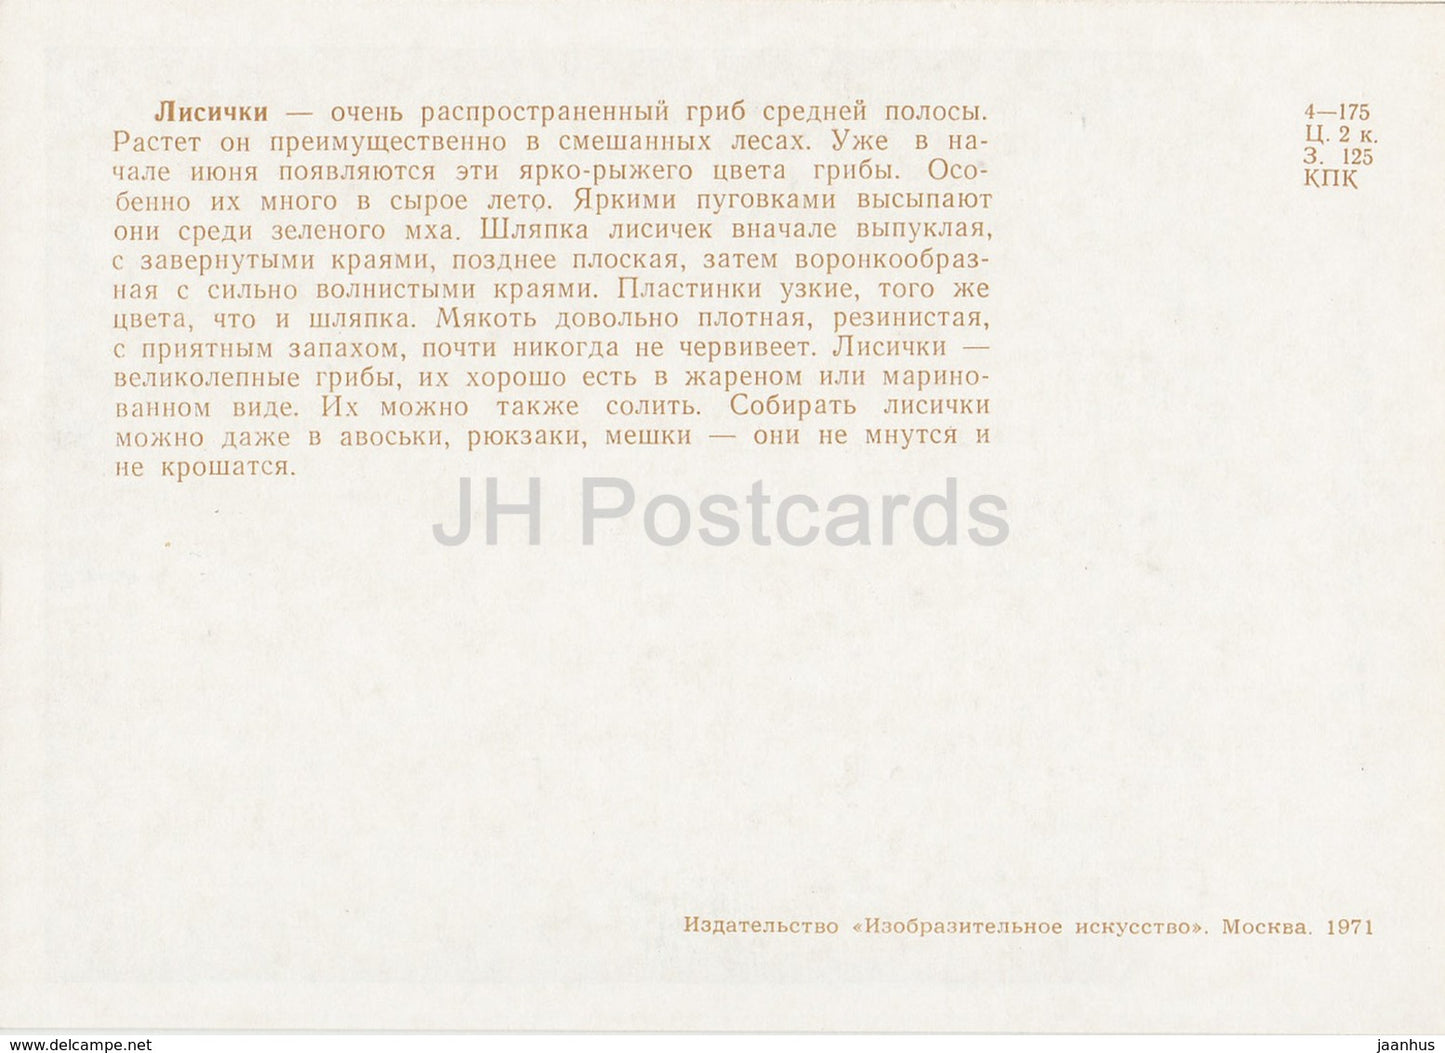 Chanterelle - Cantharellus cibarius - mushrooms - illustration - 1971 - Russia USSR - unused